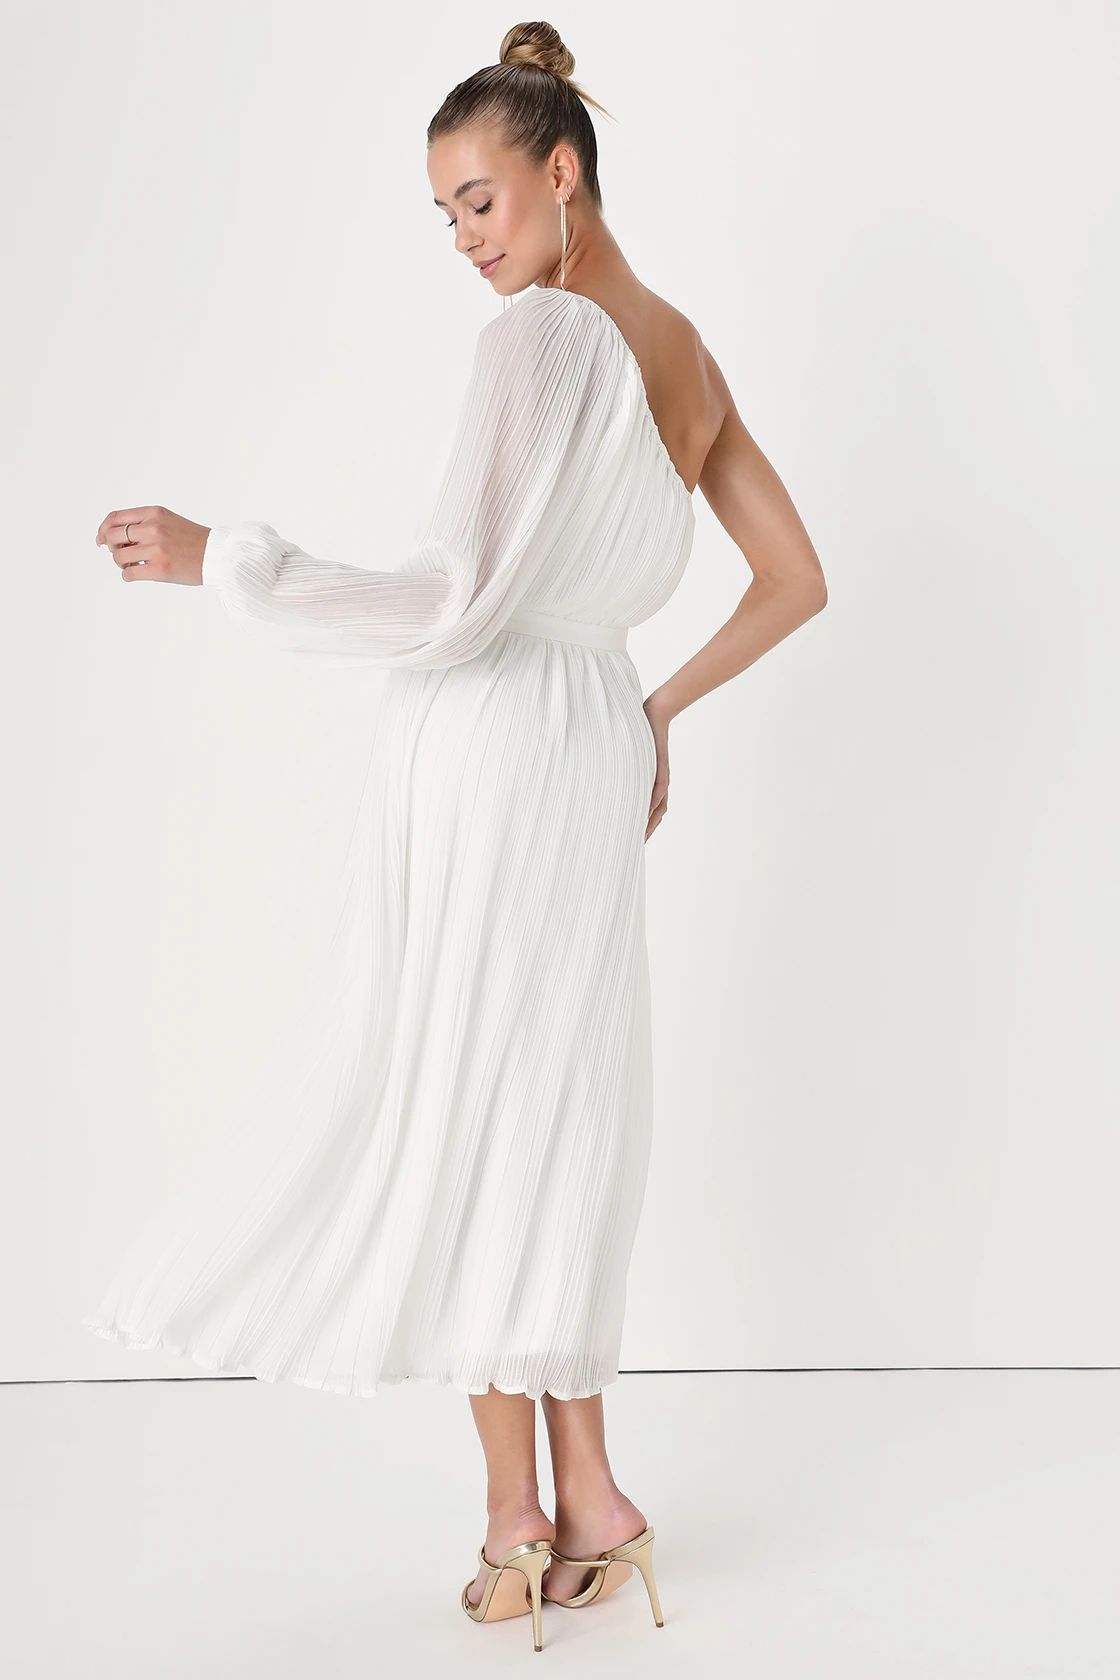 Always Loving You White Pleated One-Shoulder Midi Dress | Lulus